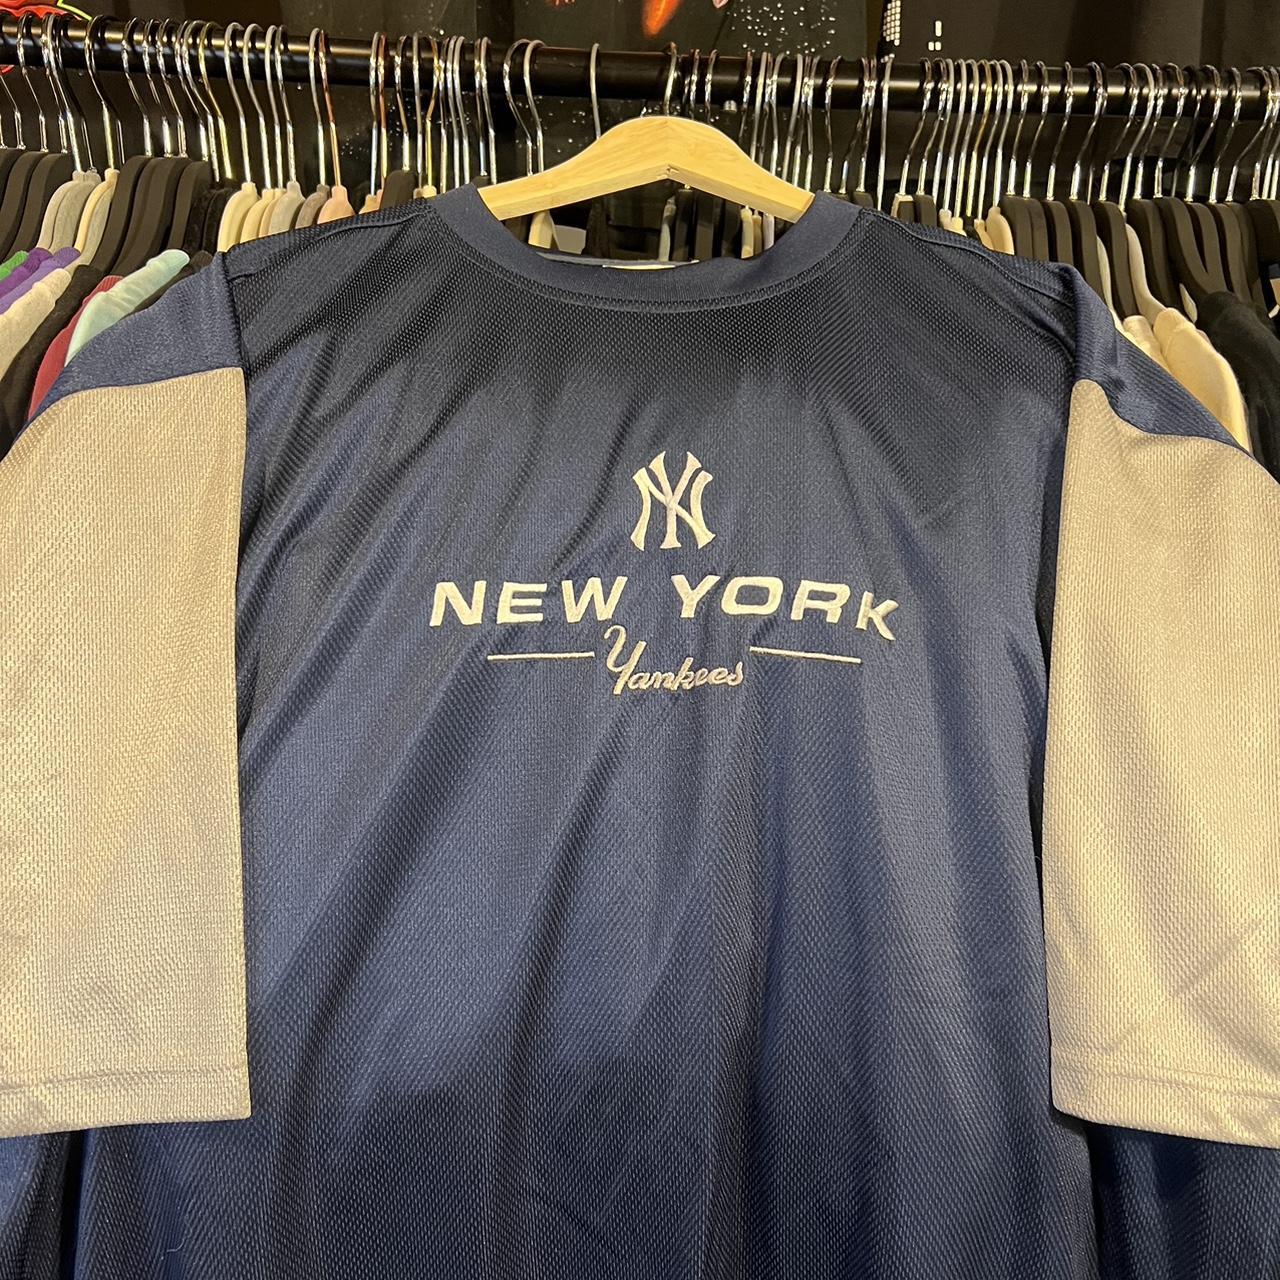 Lee, Shirts, Vintage Lee Sport New York Yankees T Shirt Jersey Navy Blue  Size Xl Mlb Series